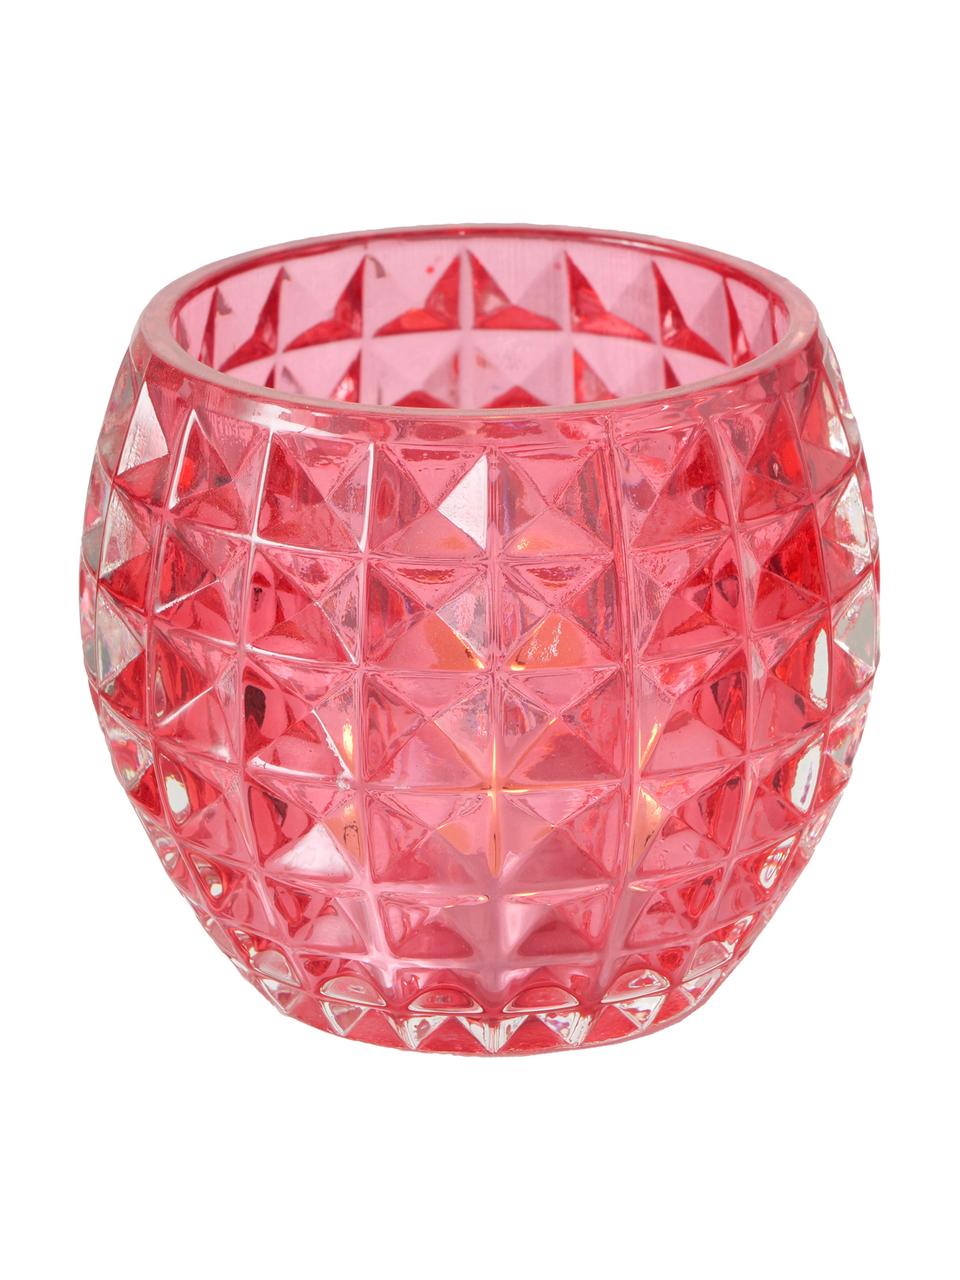 Windlichtenset Aliza, 3-delig, Glas, Rood, roze, Ø 10 cm